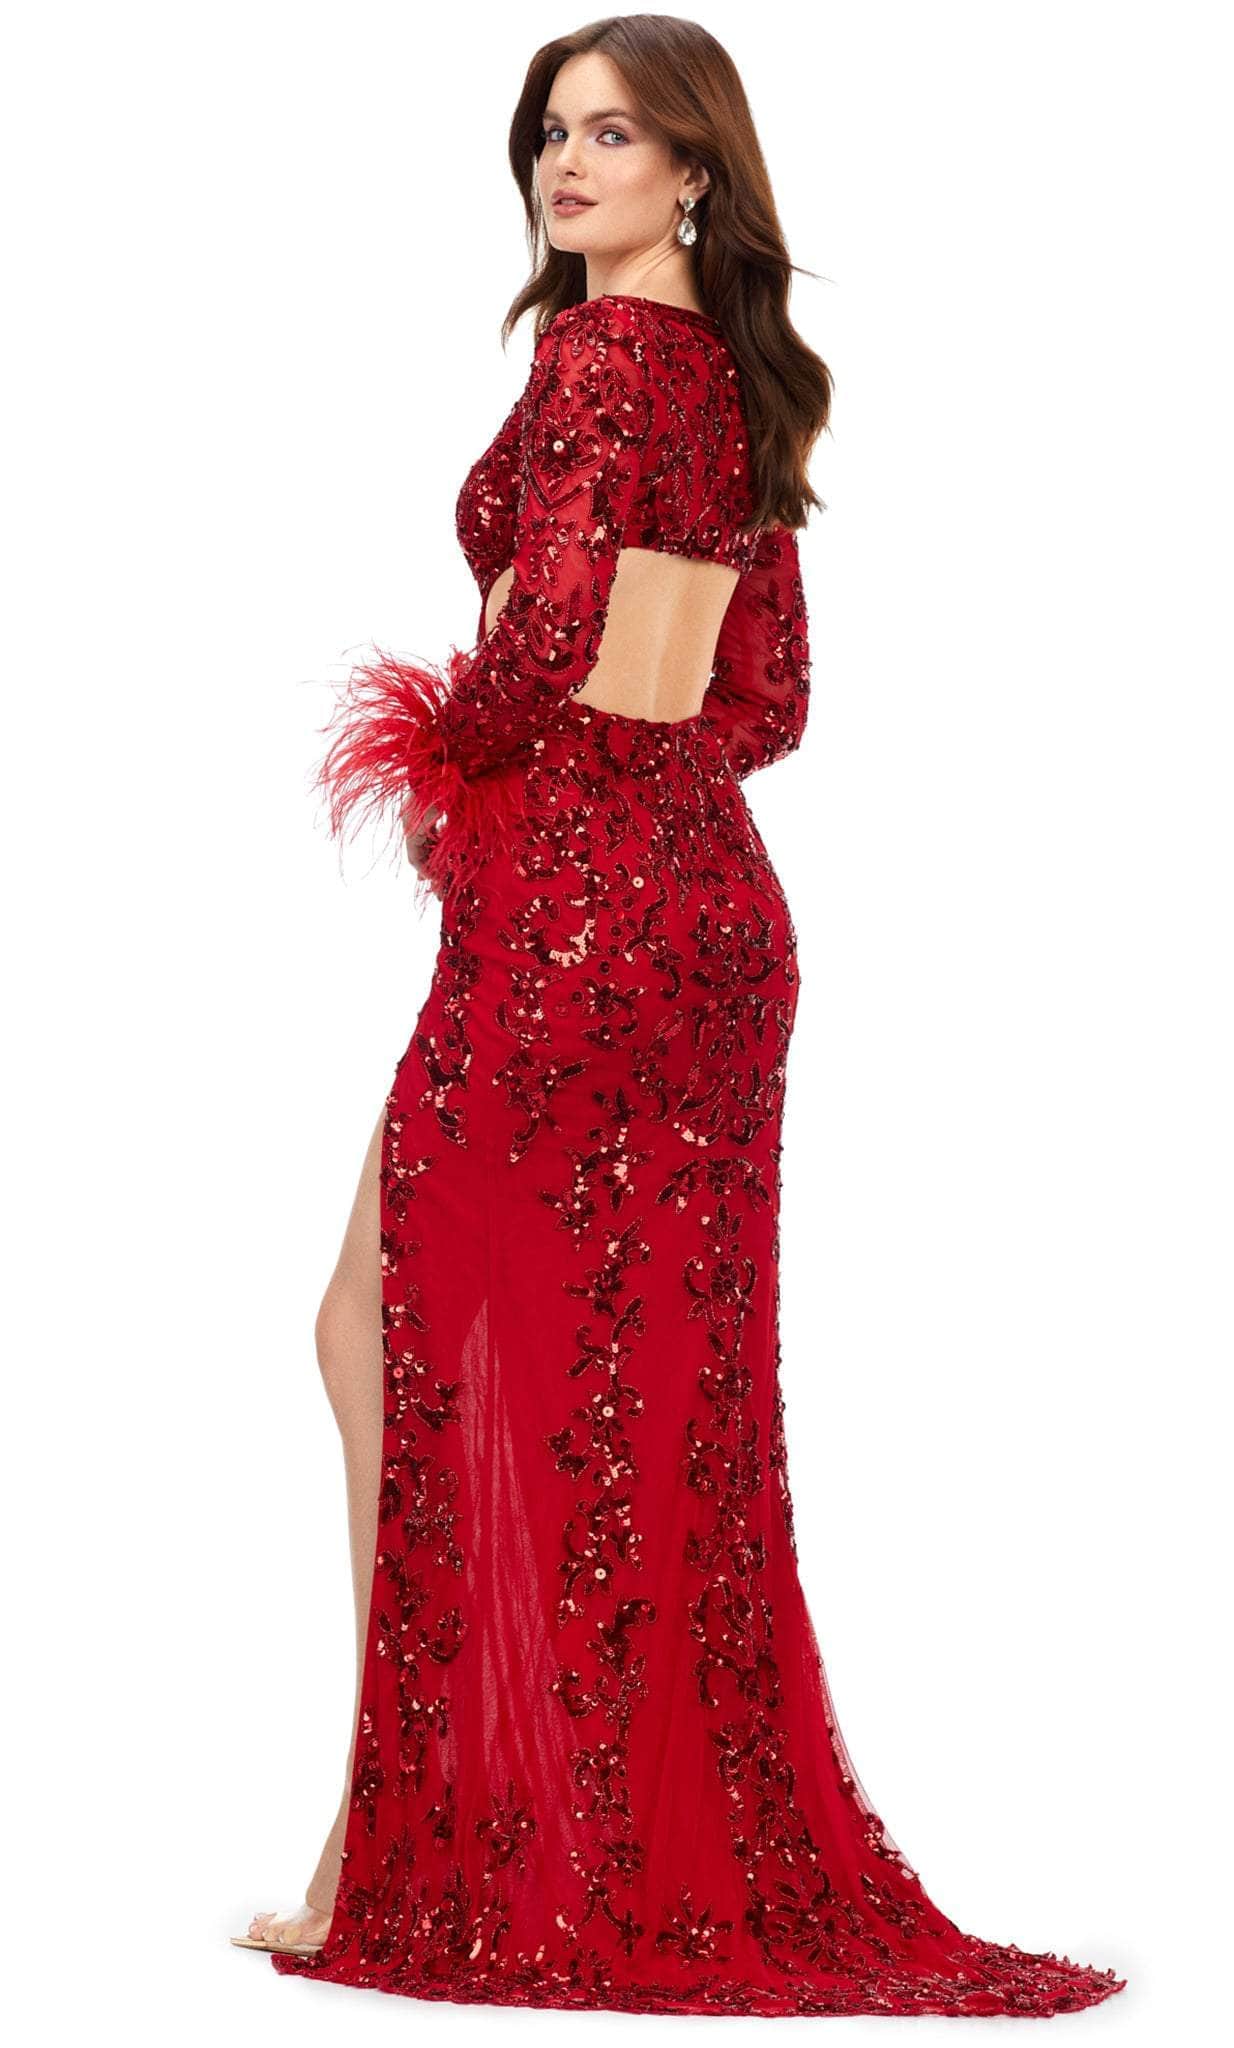 Ashley Lauren 11364 - Long Sleeve Beaded Evening Gown Evening Dresses 8 /Hot Pink